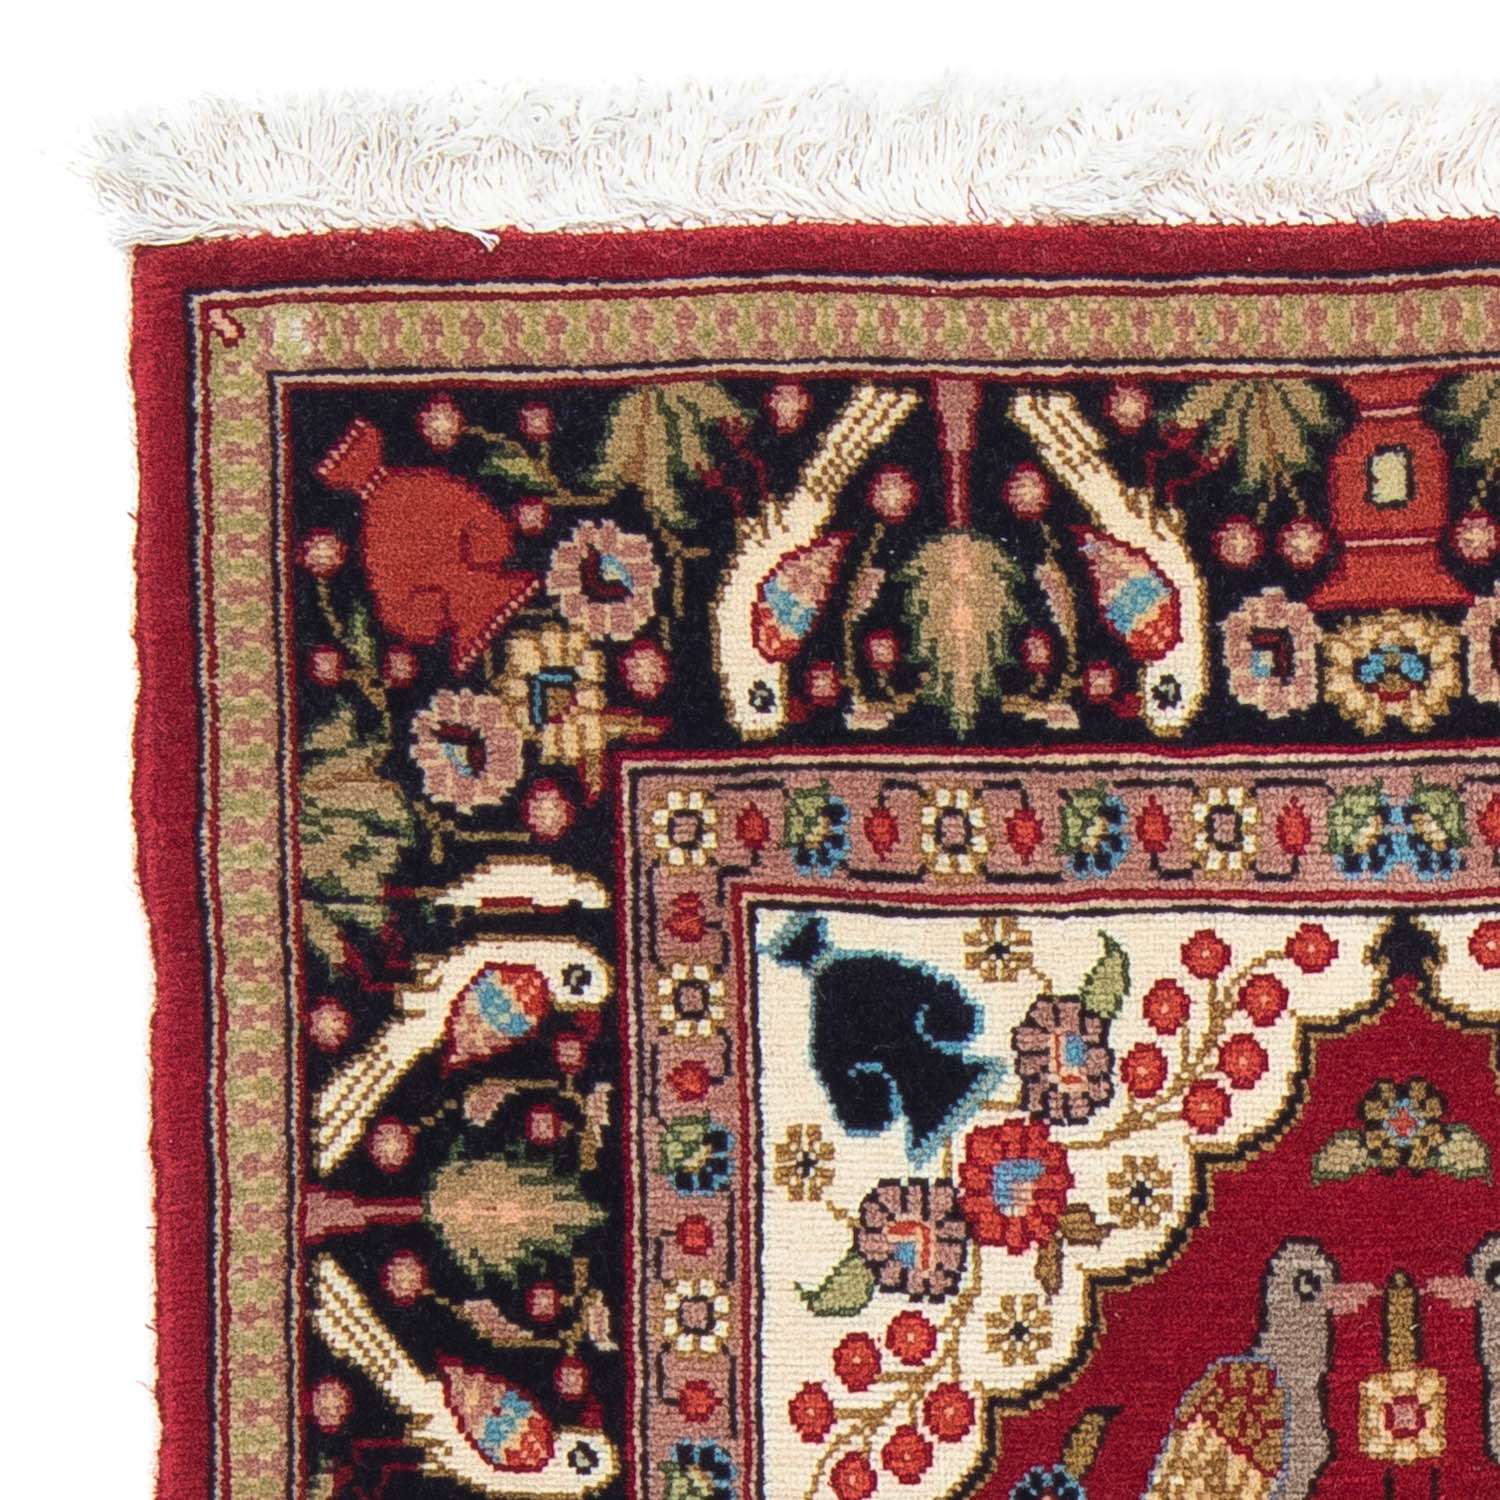 Perzisch tapijt - Klassiek - 80 x 55 cm - donkerrood